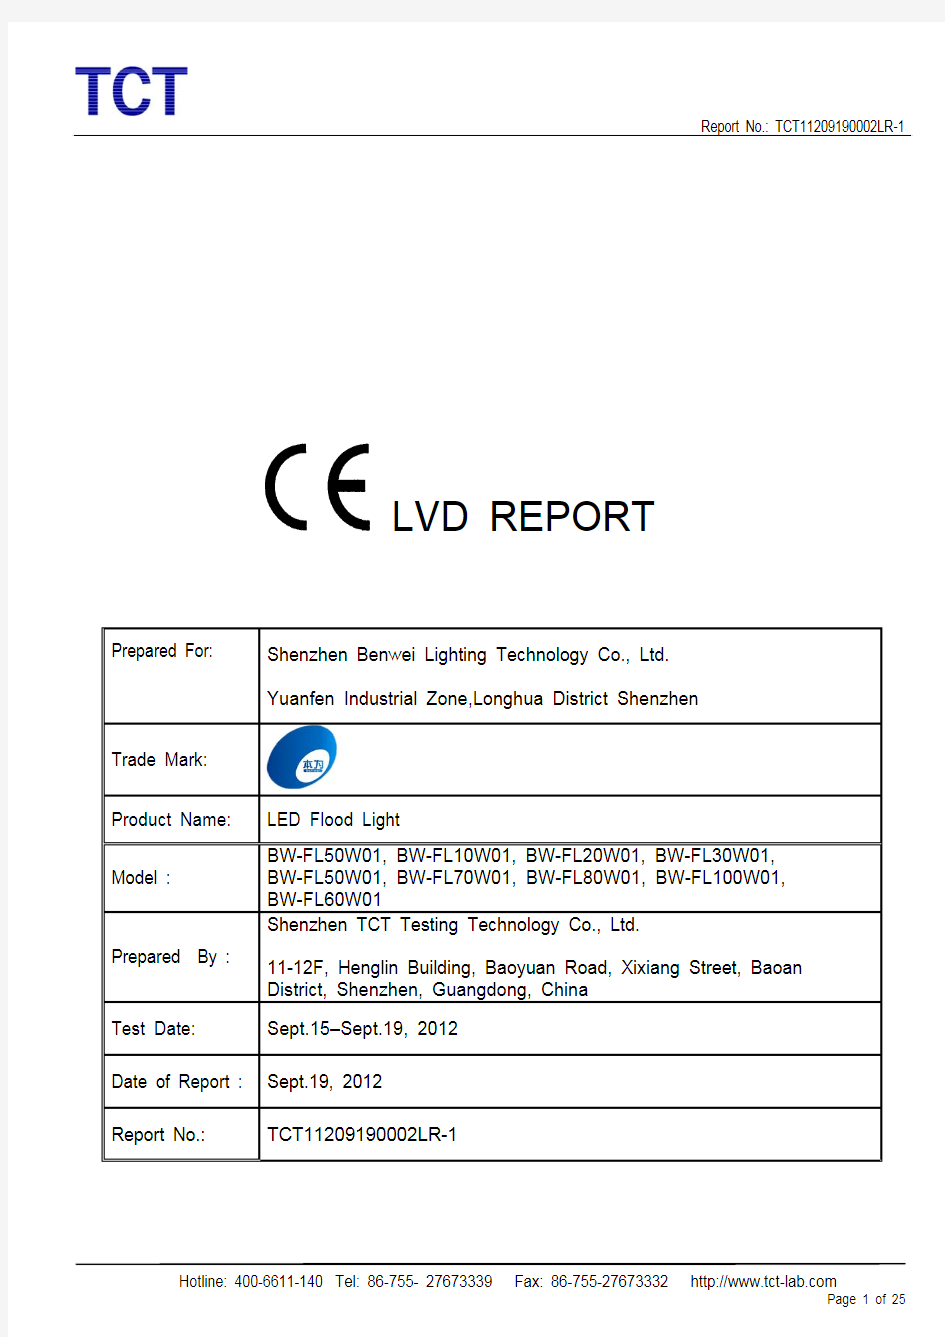 LED flood light test report LVD